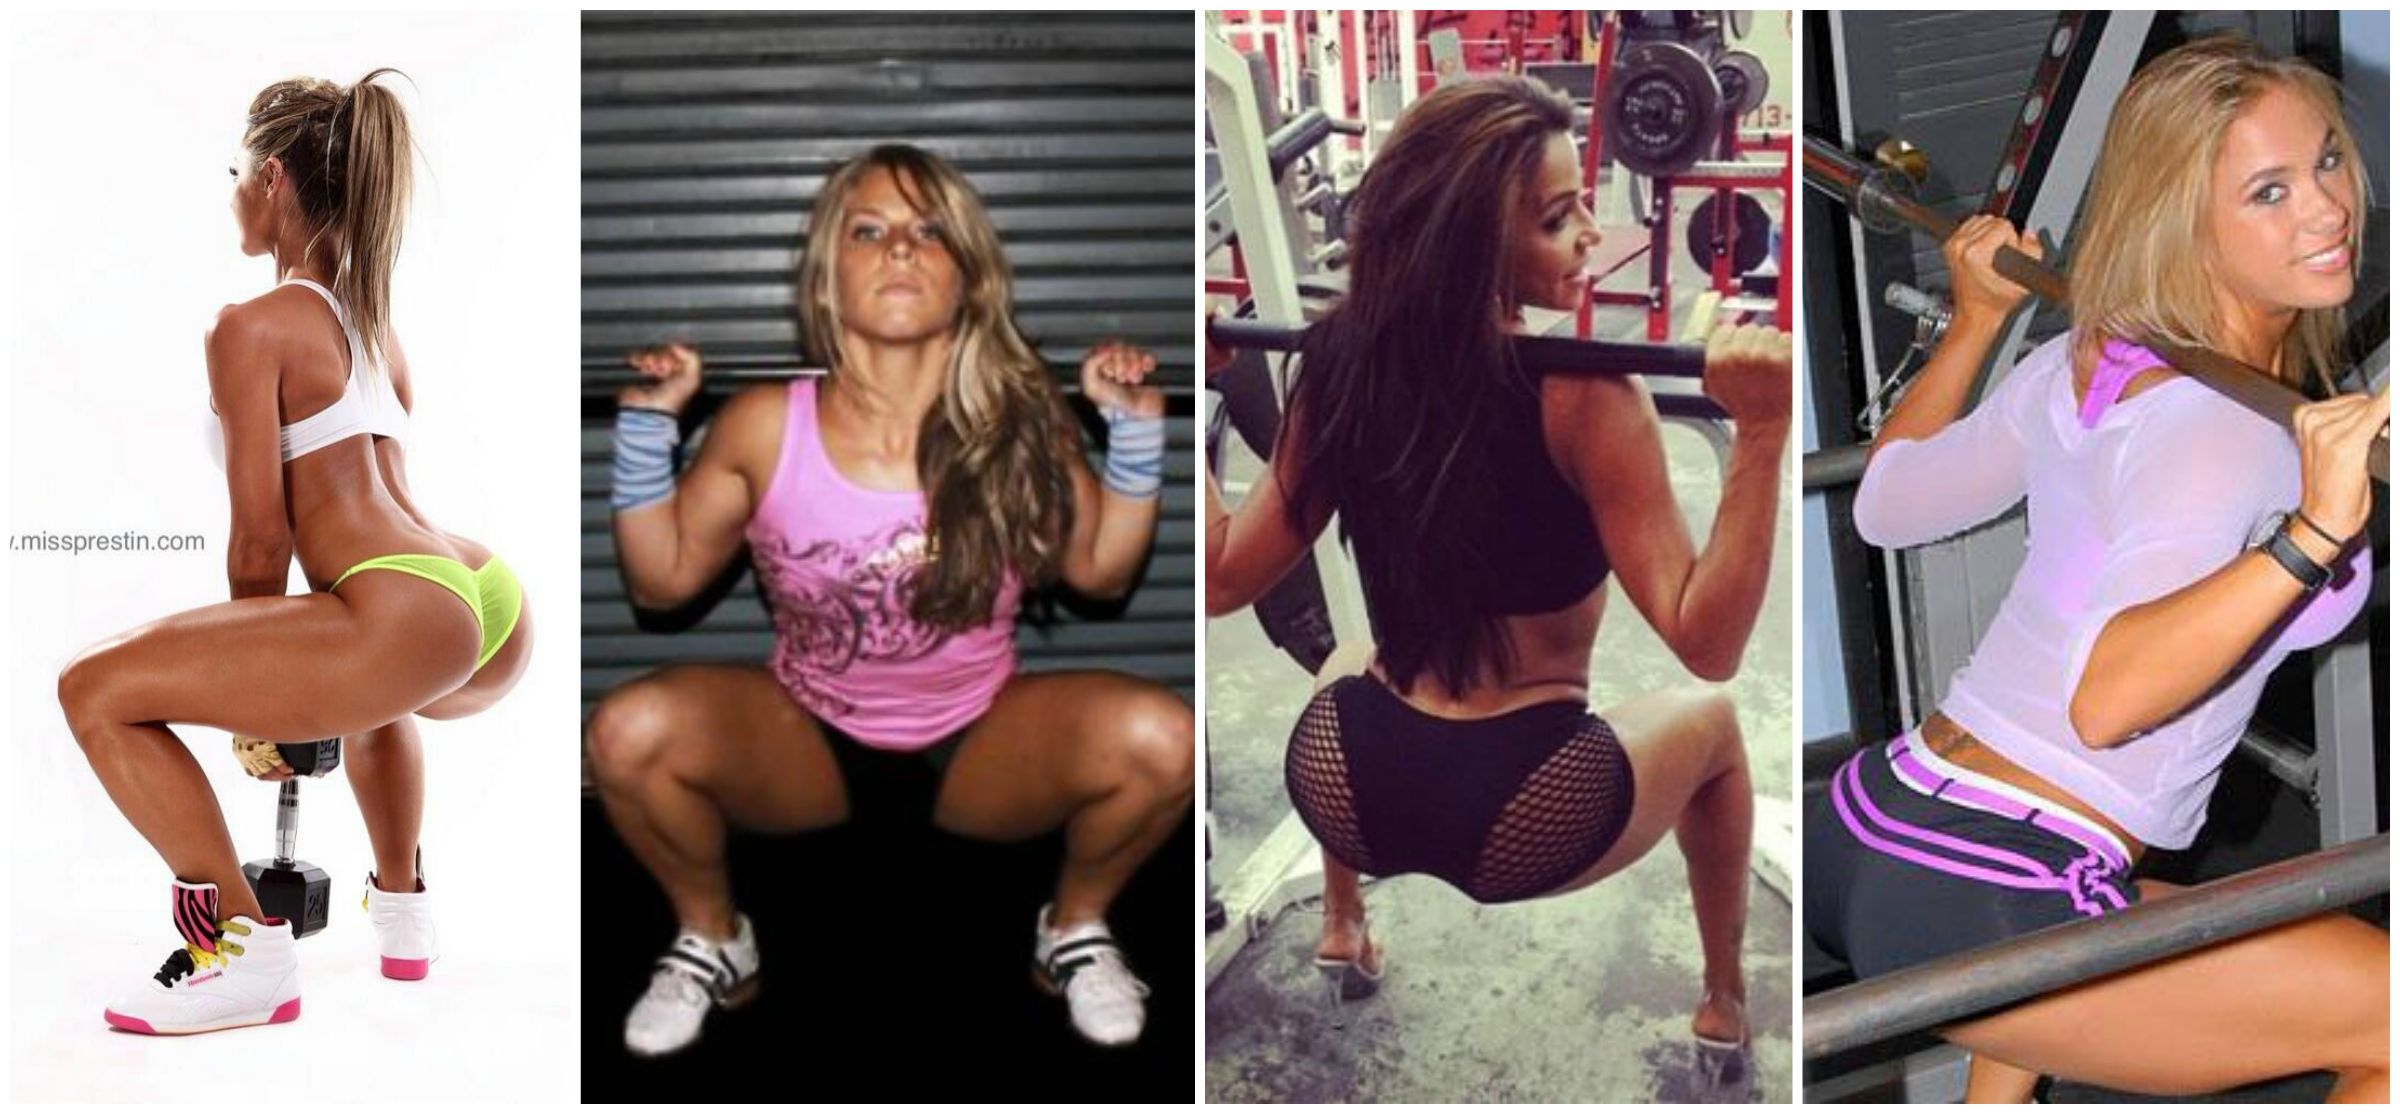 Girl squat motivation-hot porn